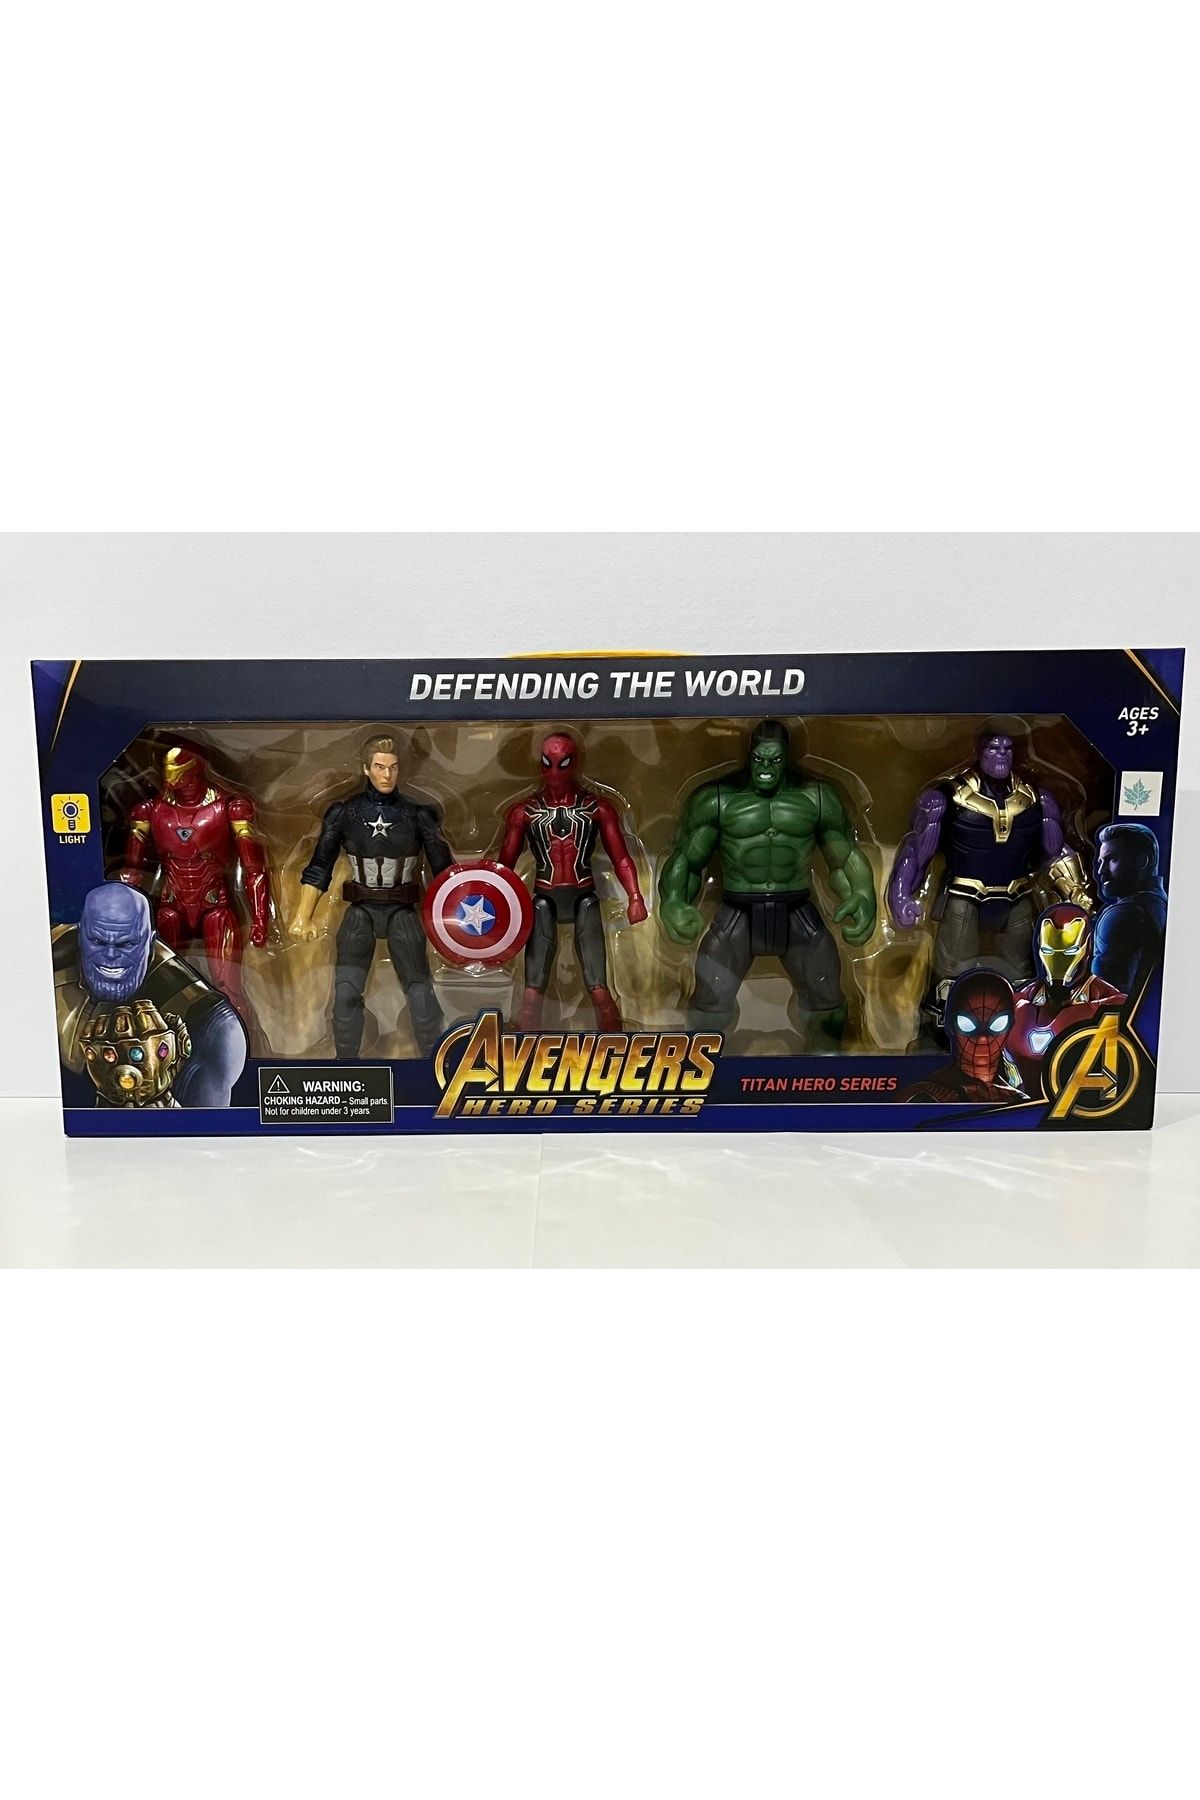 Figurine Marvel Avengers Spiderman Batman Thanos Hulk Captain